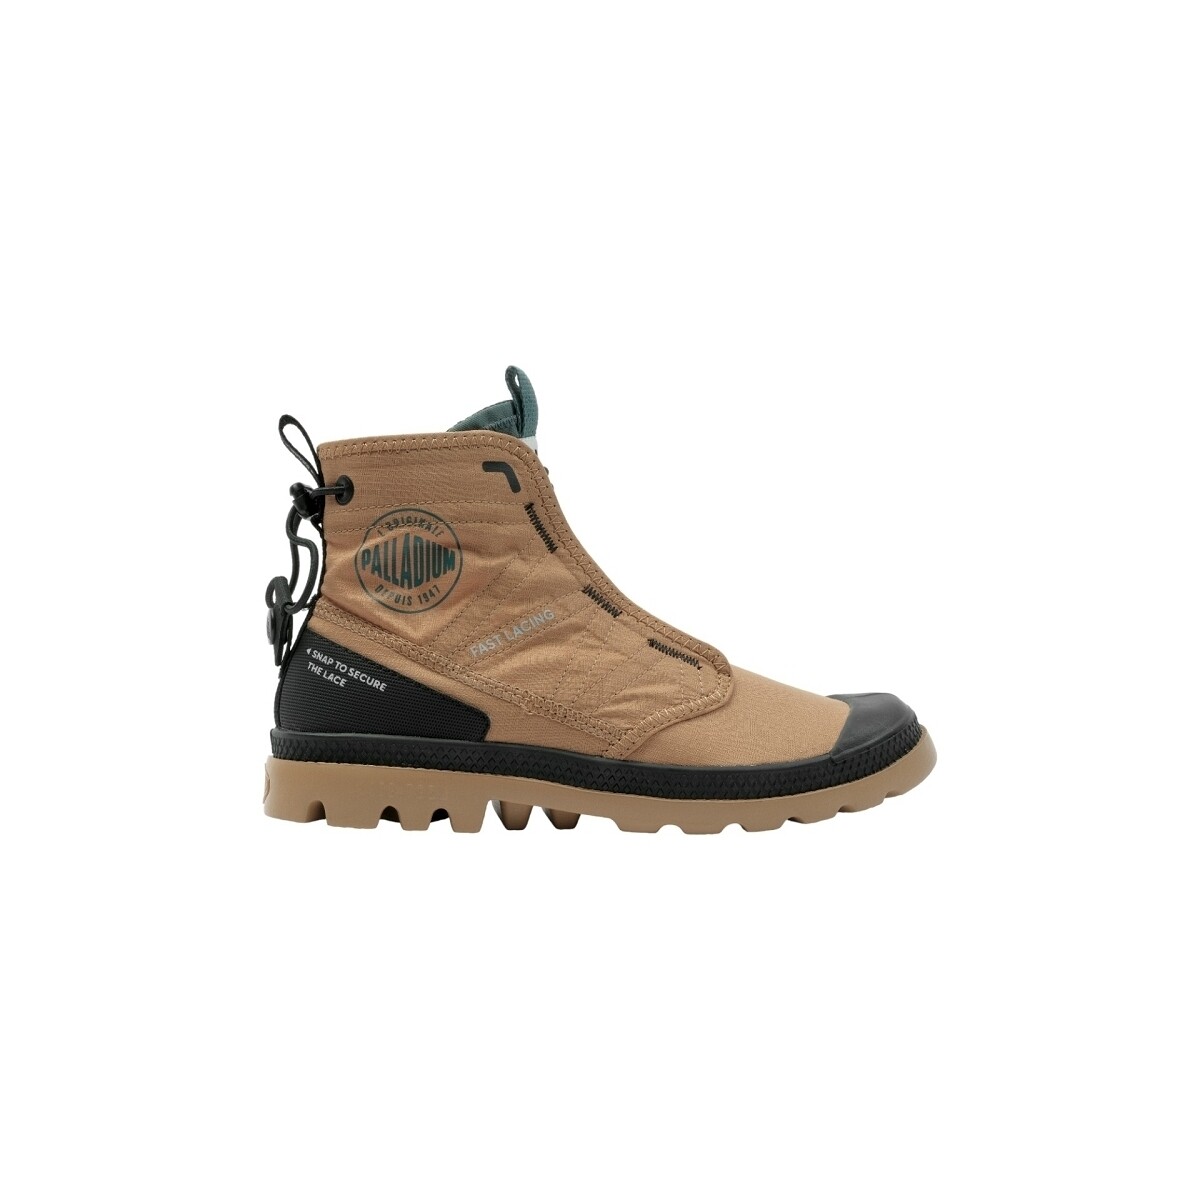 Chaussures Homme Boots Palladium PAMPA TRAVEL LITE RS Marron